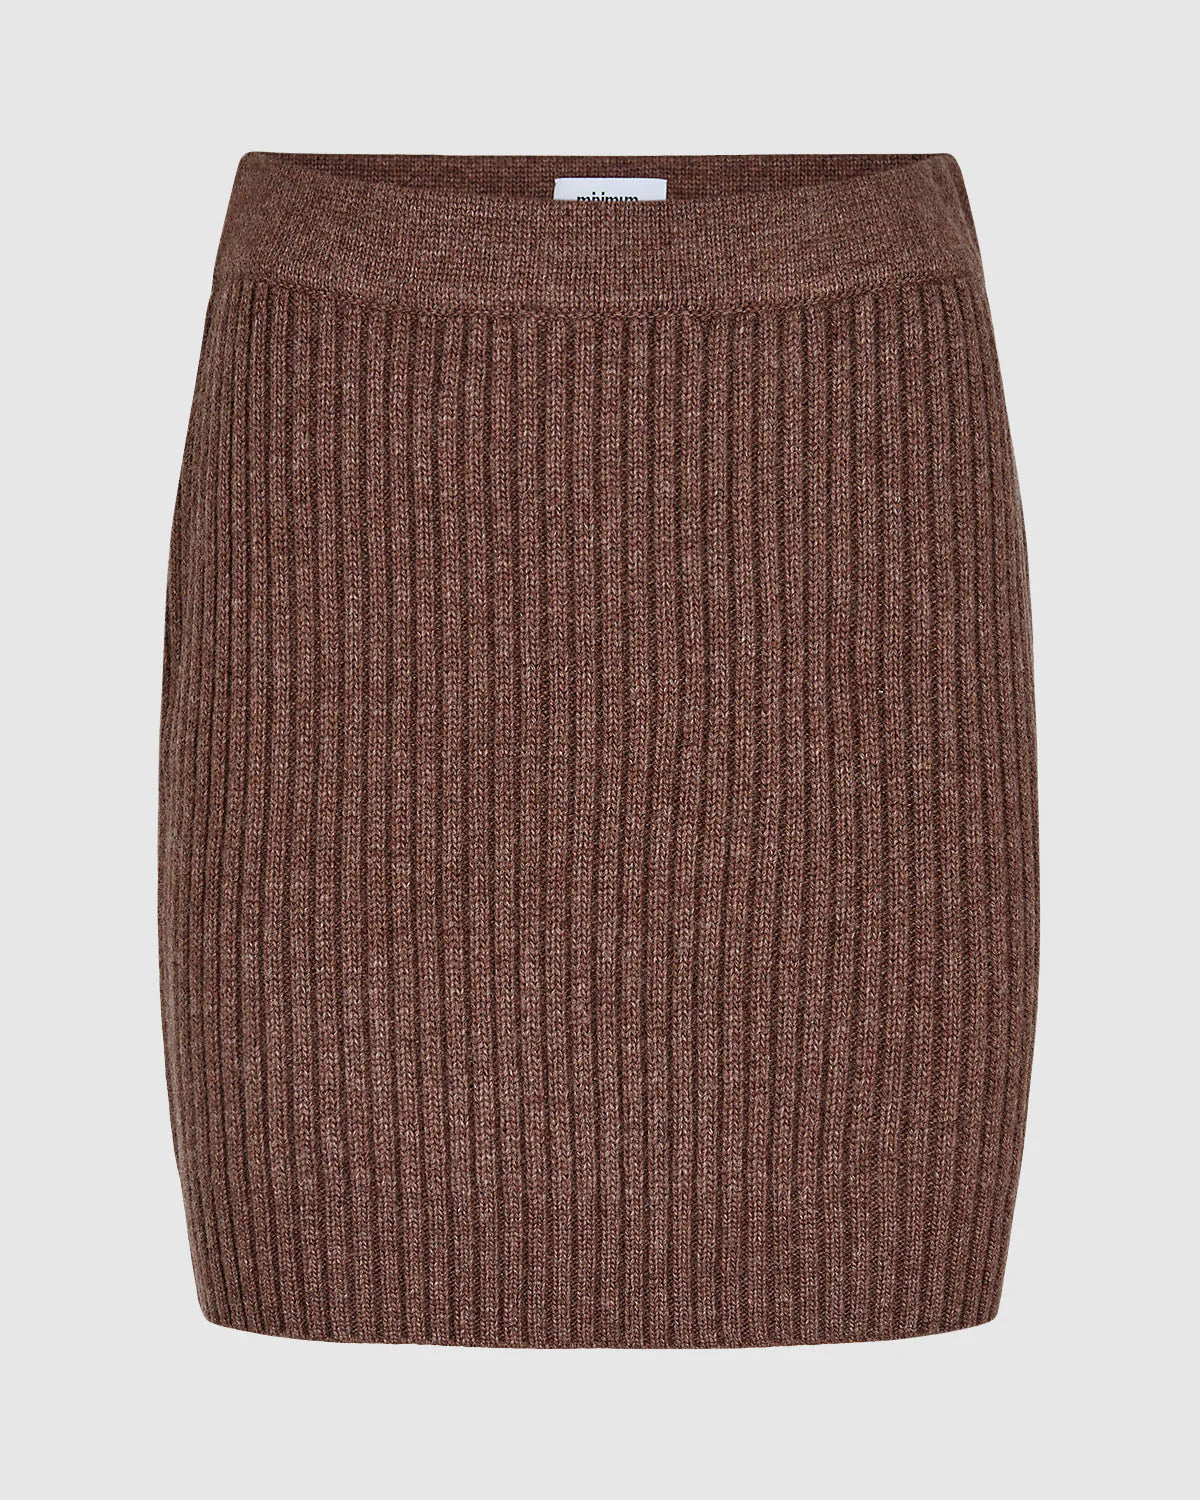 sandies knit skirt